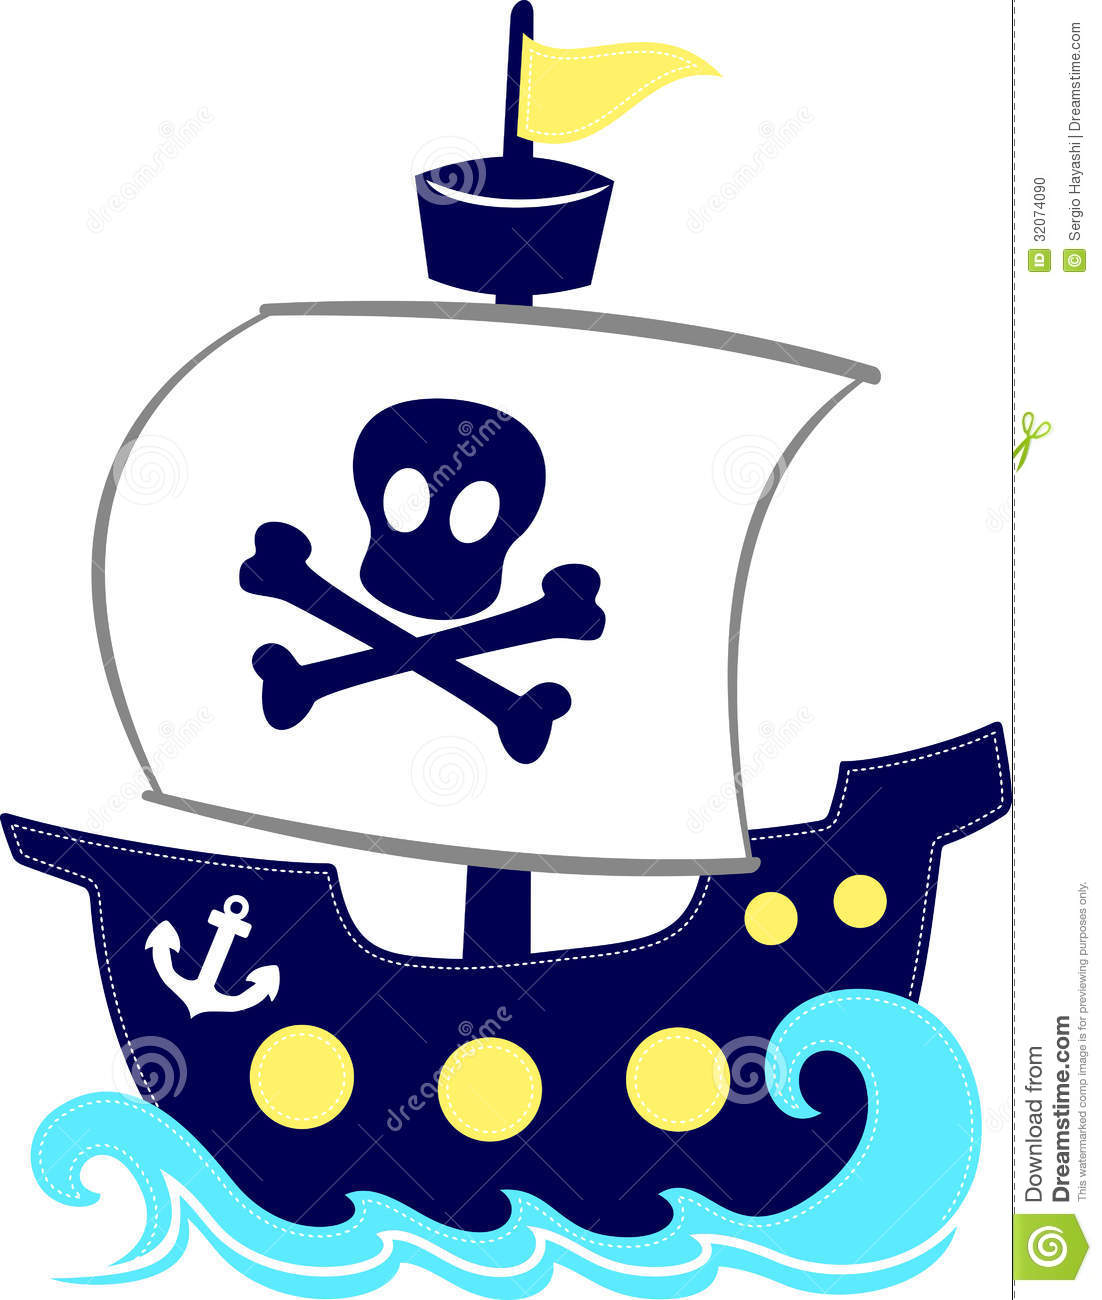 Funny Pirate Ship Cartoon Stock Photo   Image  32074090